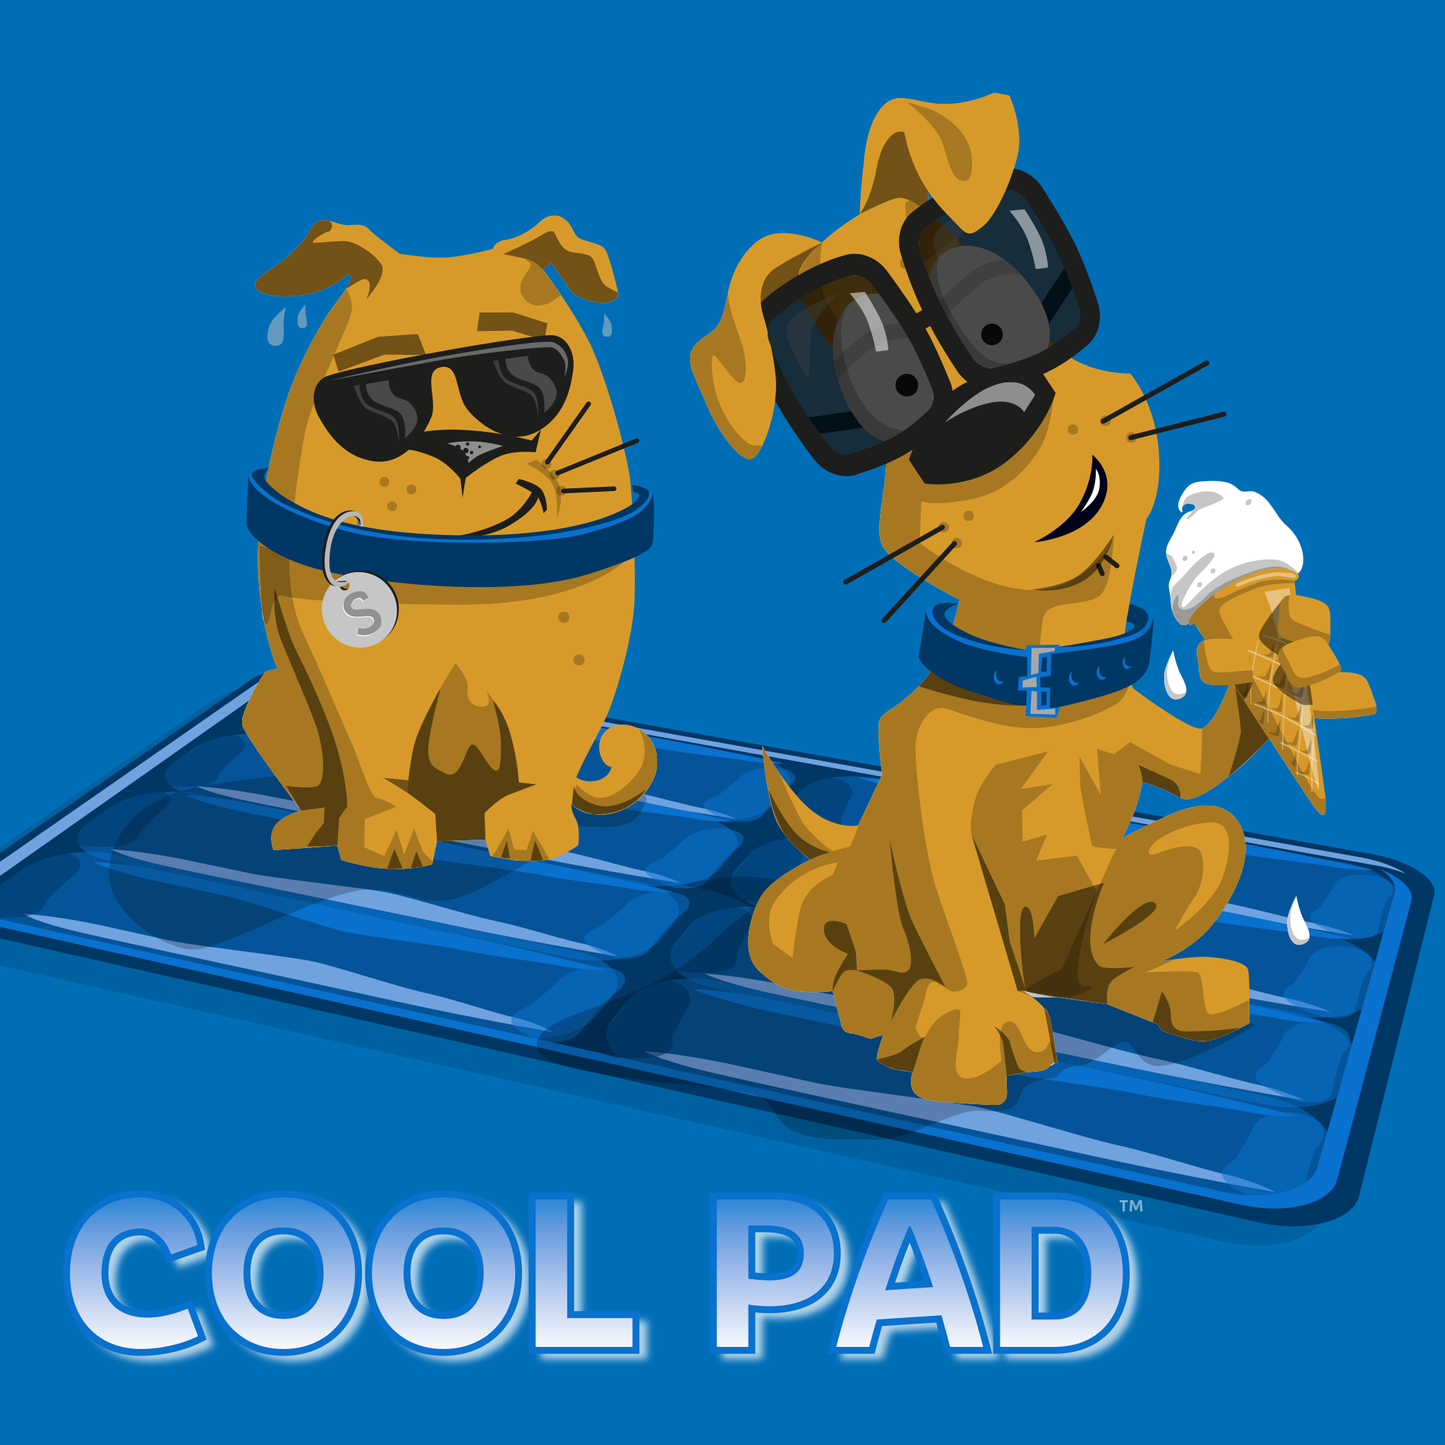 Sparky and Spud Dog Cool Pad 90cm x 60cm